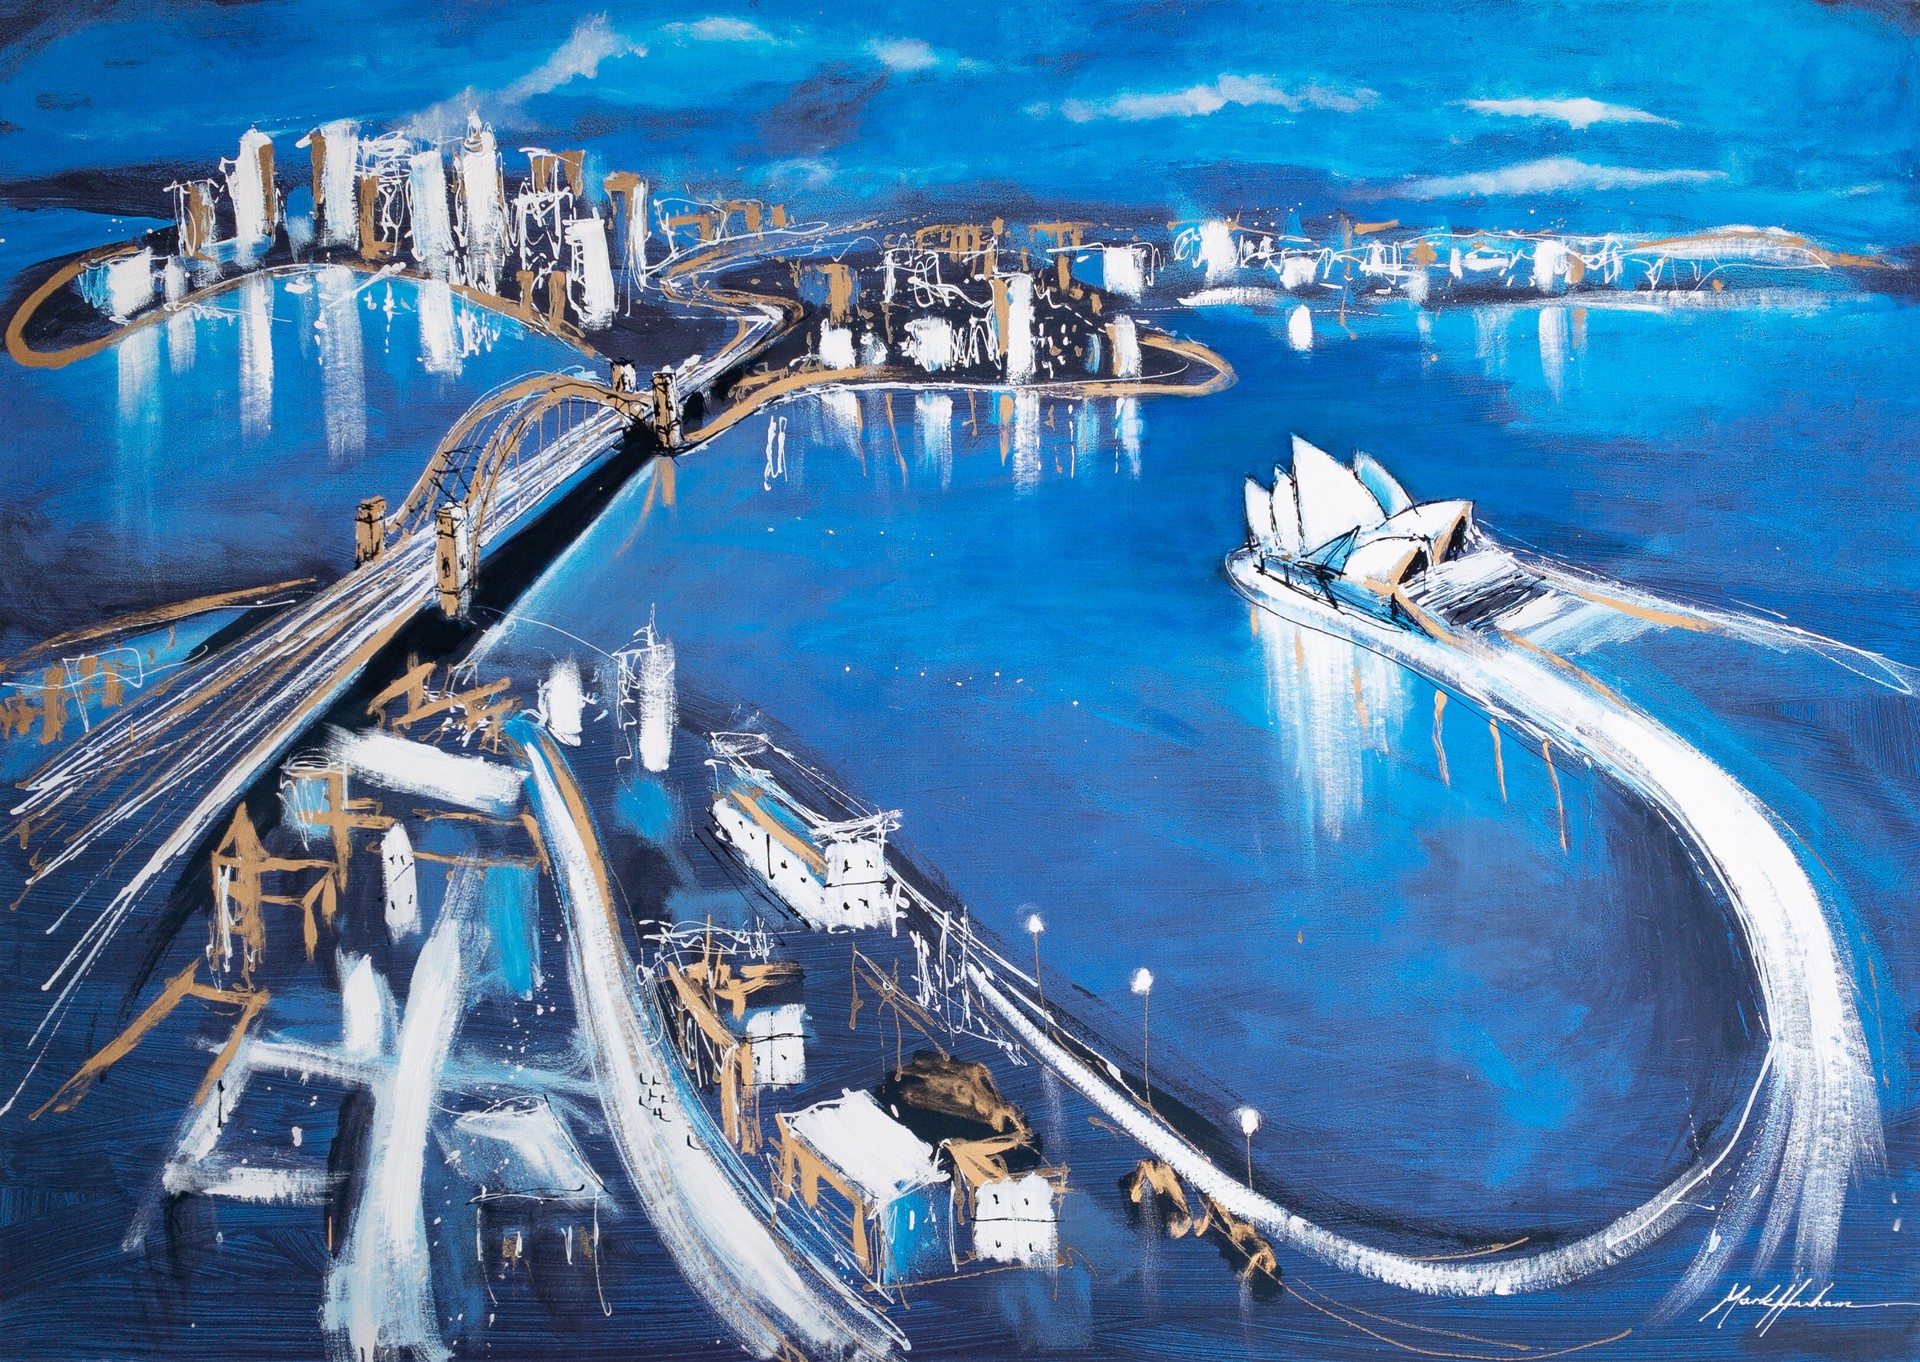 Starry Night (Sydney Series) by Mark Hanham